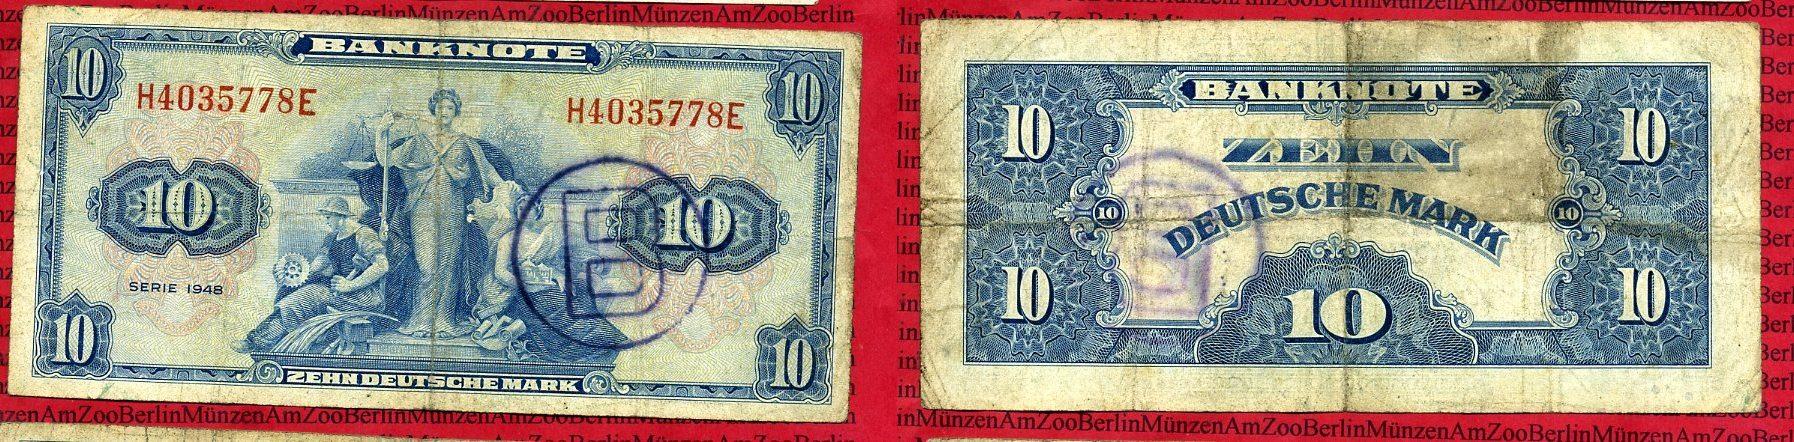 Foto Bundesrepublik Deutschland Berlin 10 Dm Deutsche Mark Kopfgeld 1948